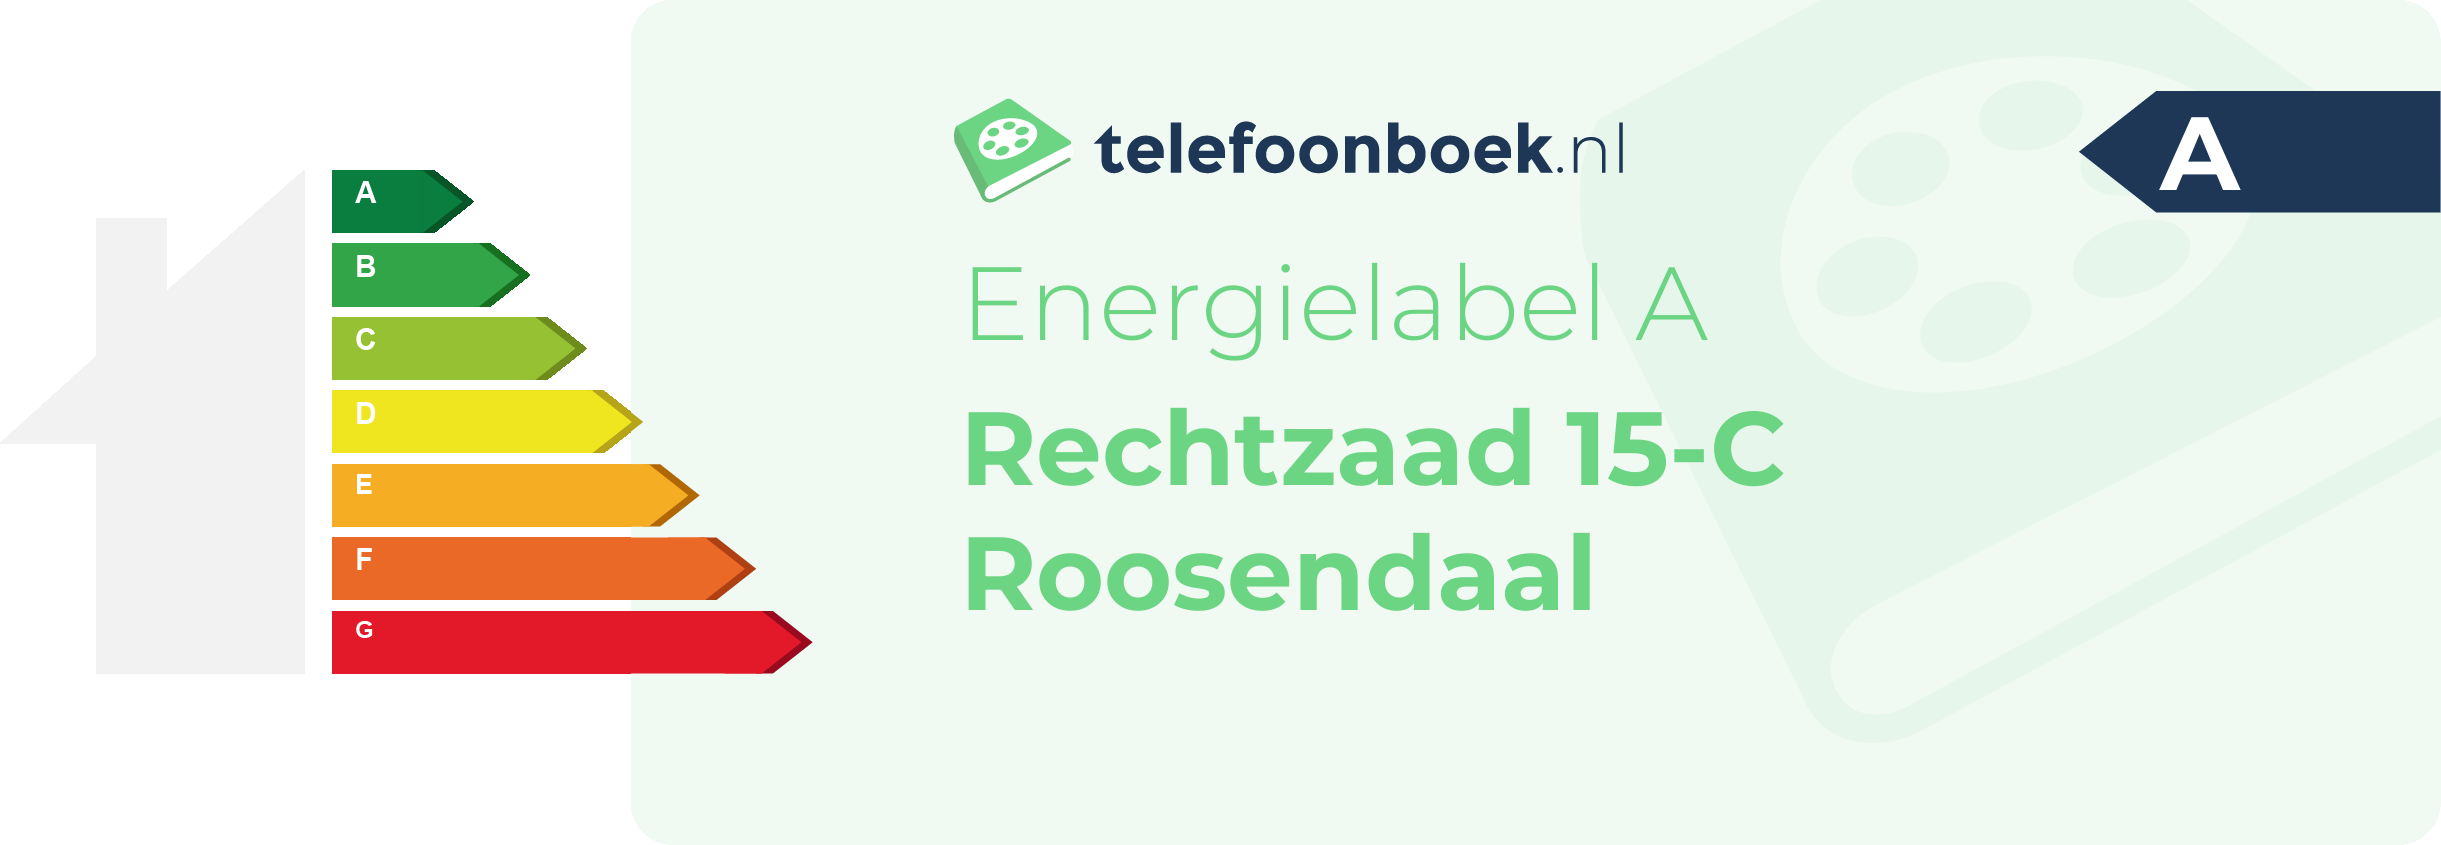 Energielabel Rechtzaad 15-C Roosendaal